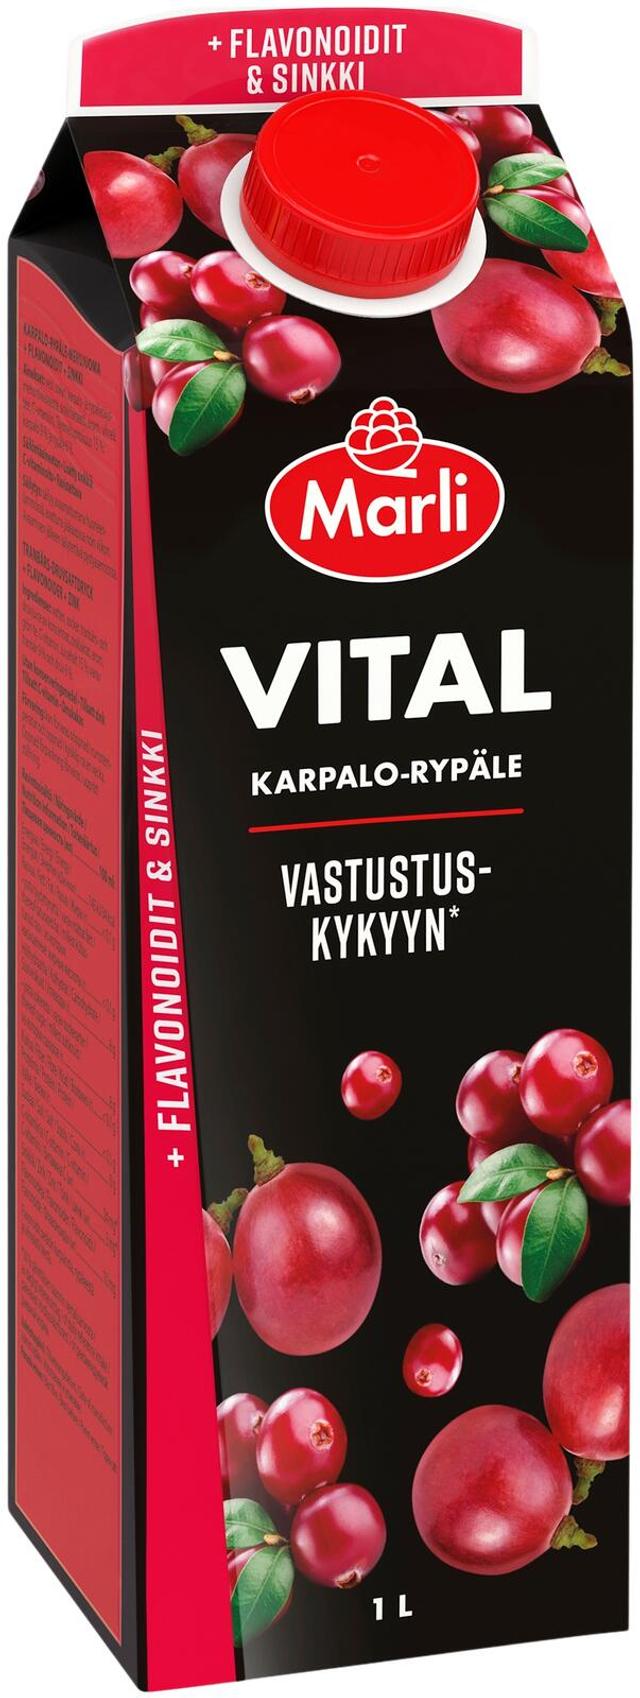 Marli Vital Karpalo-rypäle + flavonoidit + sinkkilaktaatti mehujuoma 1L